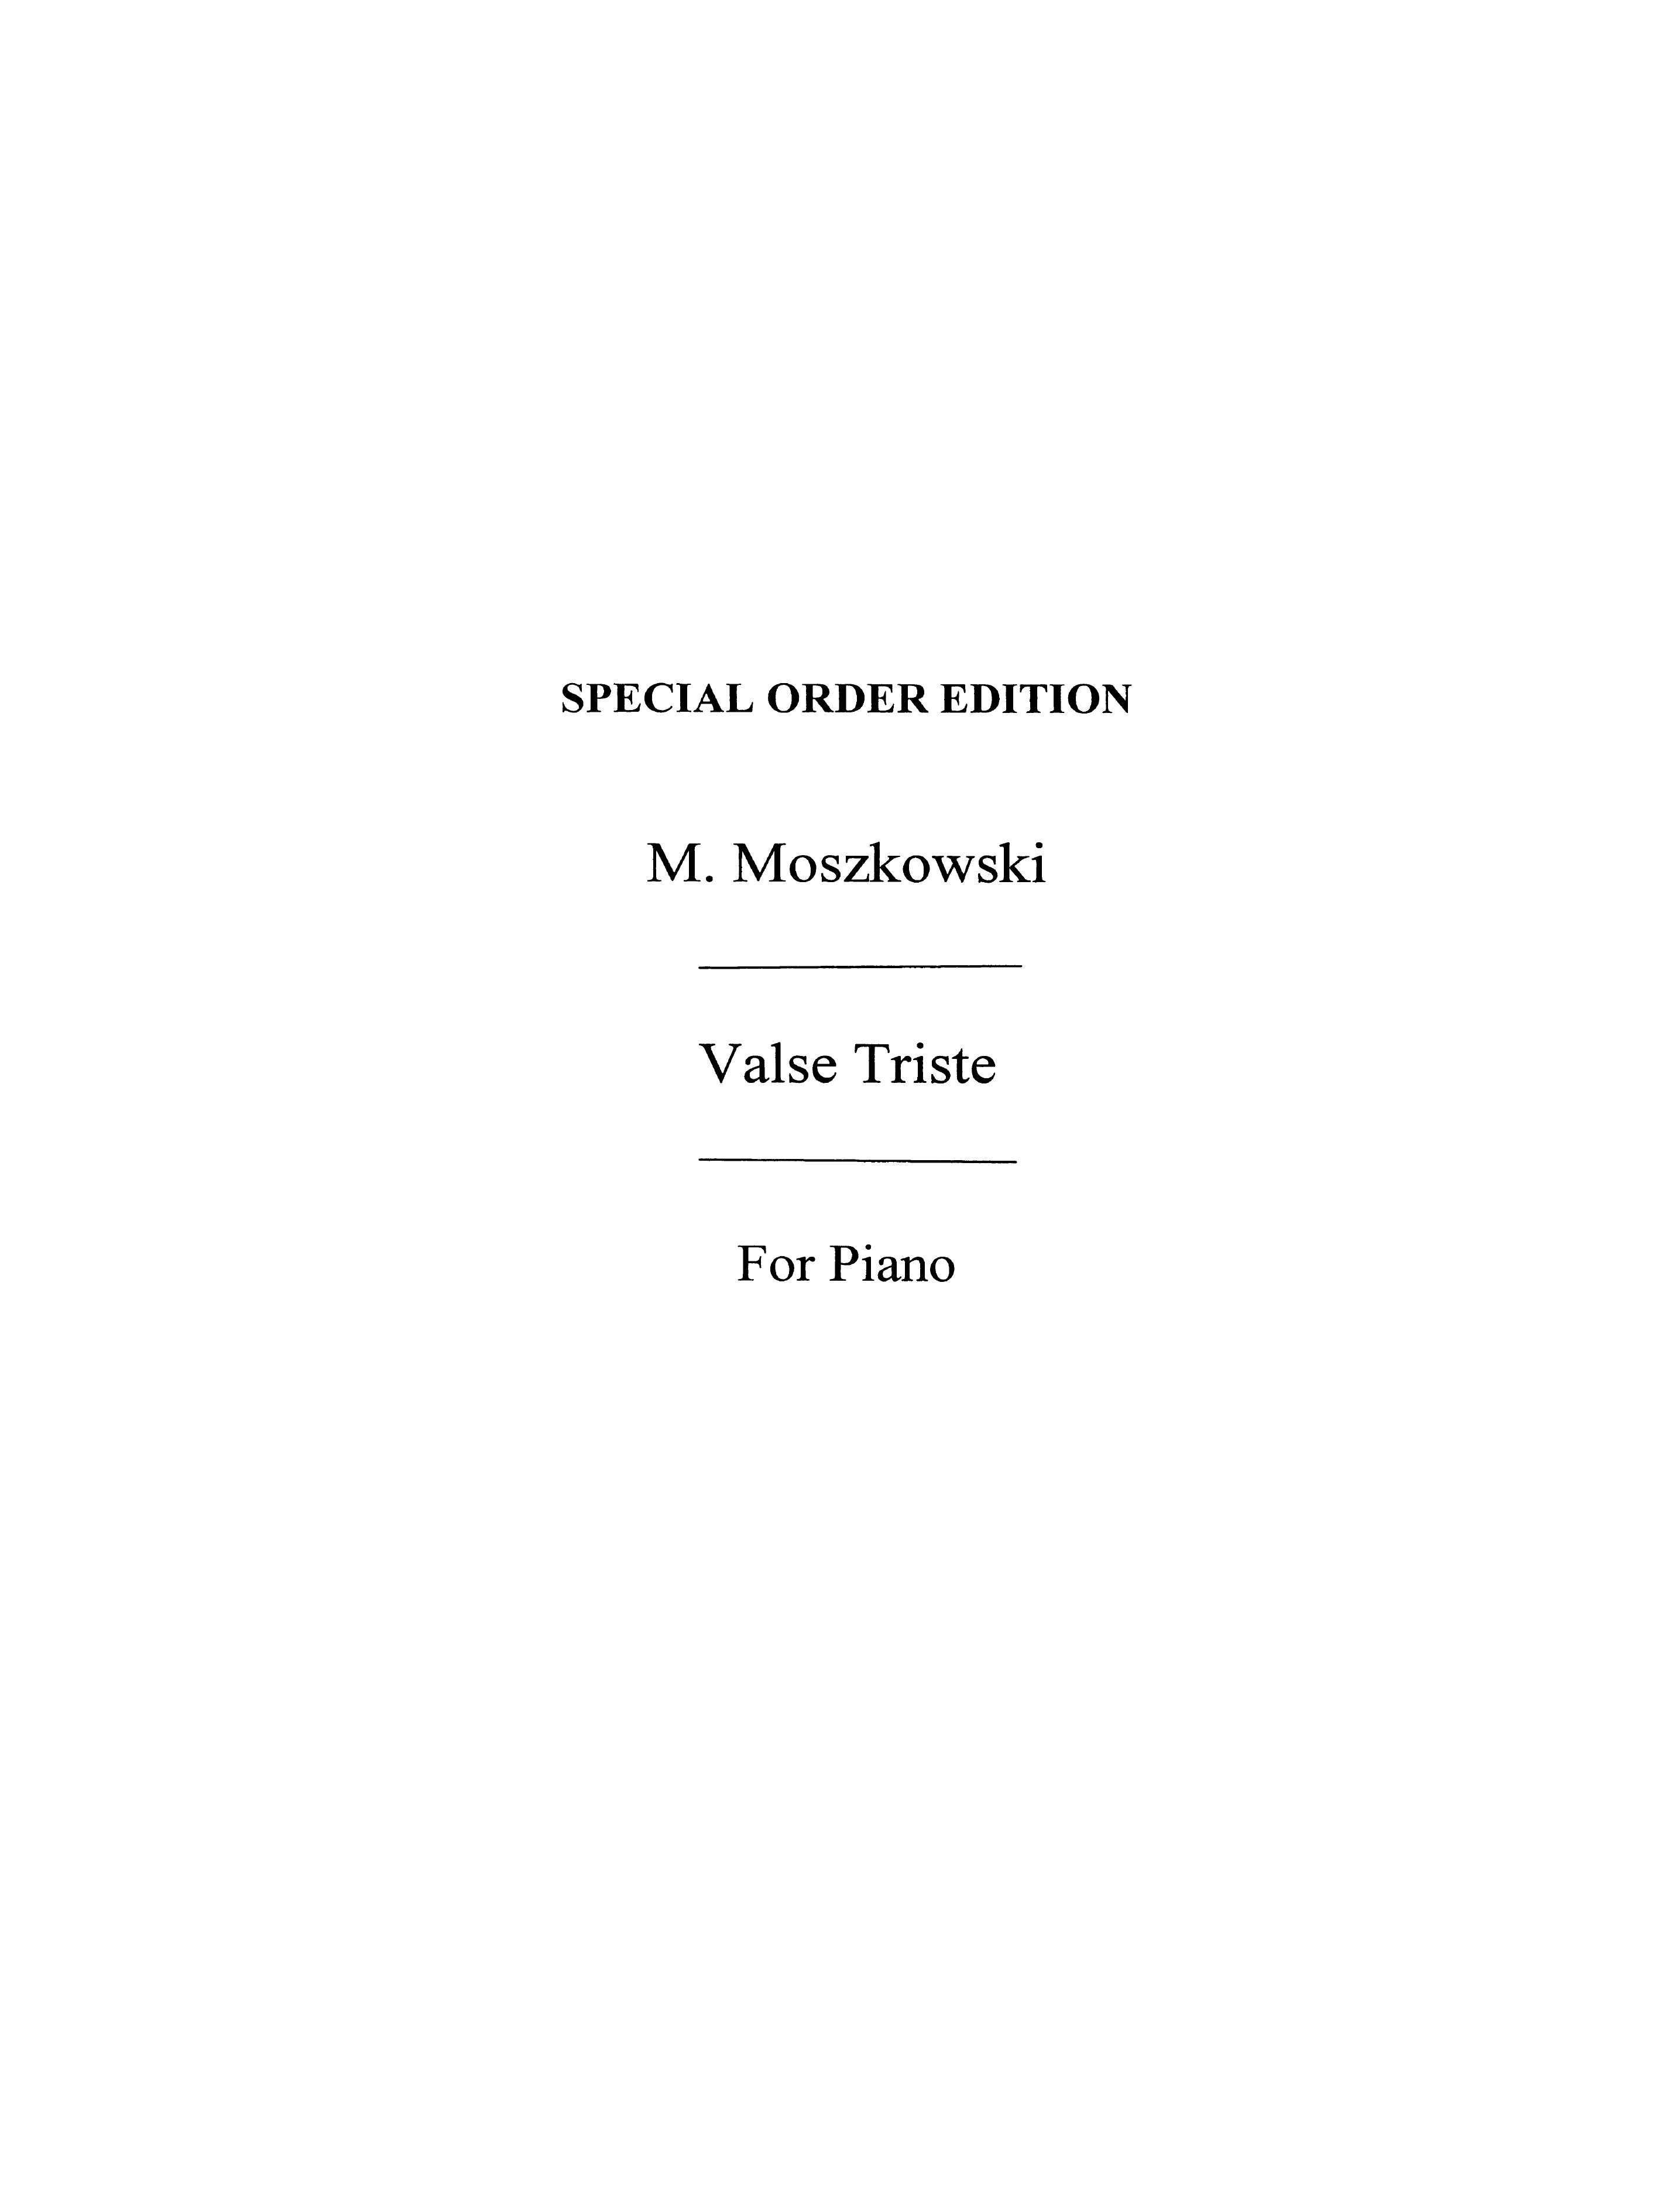 Moszkowski, M Valse Triste Op.89/3 Pf